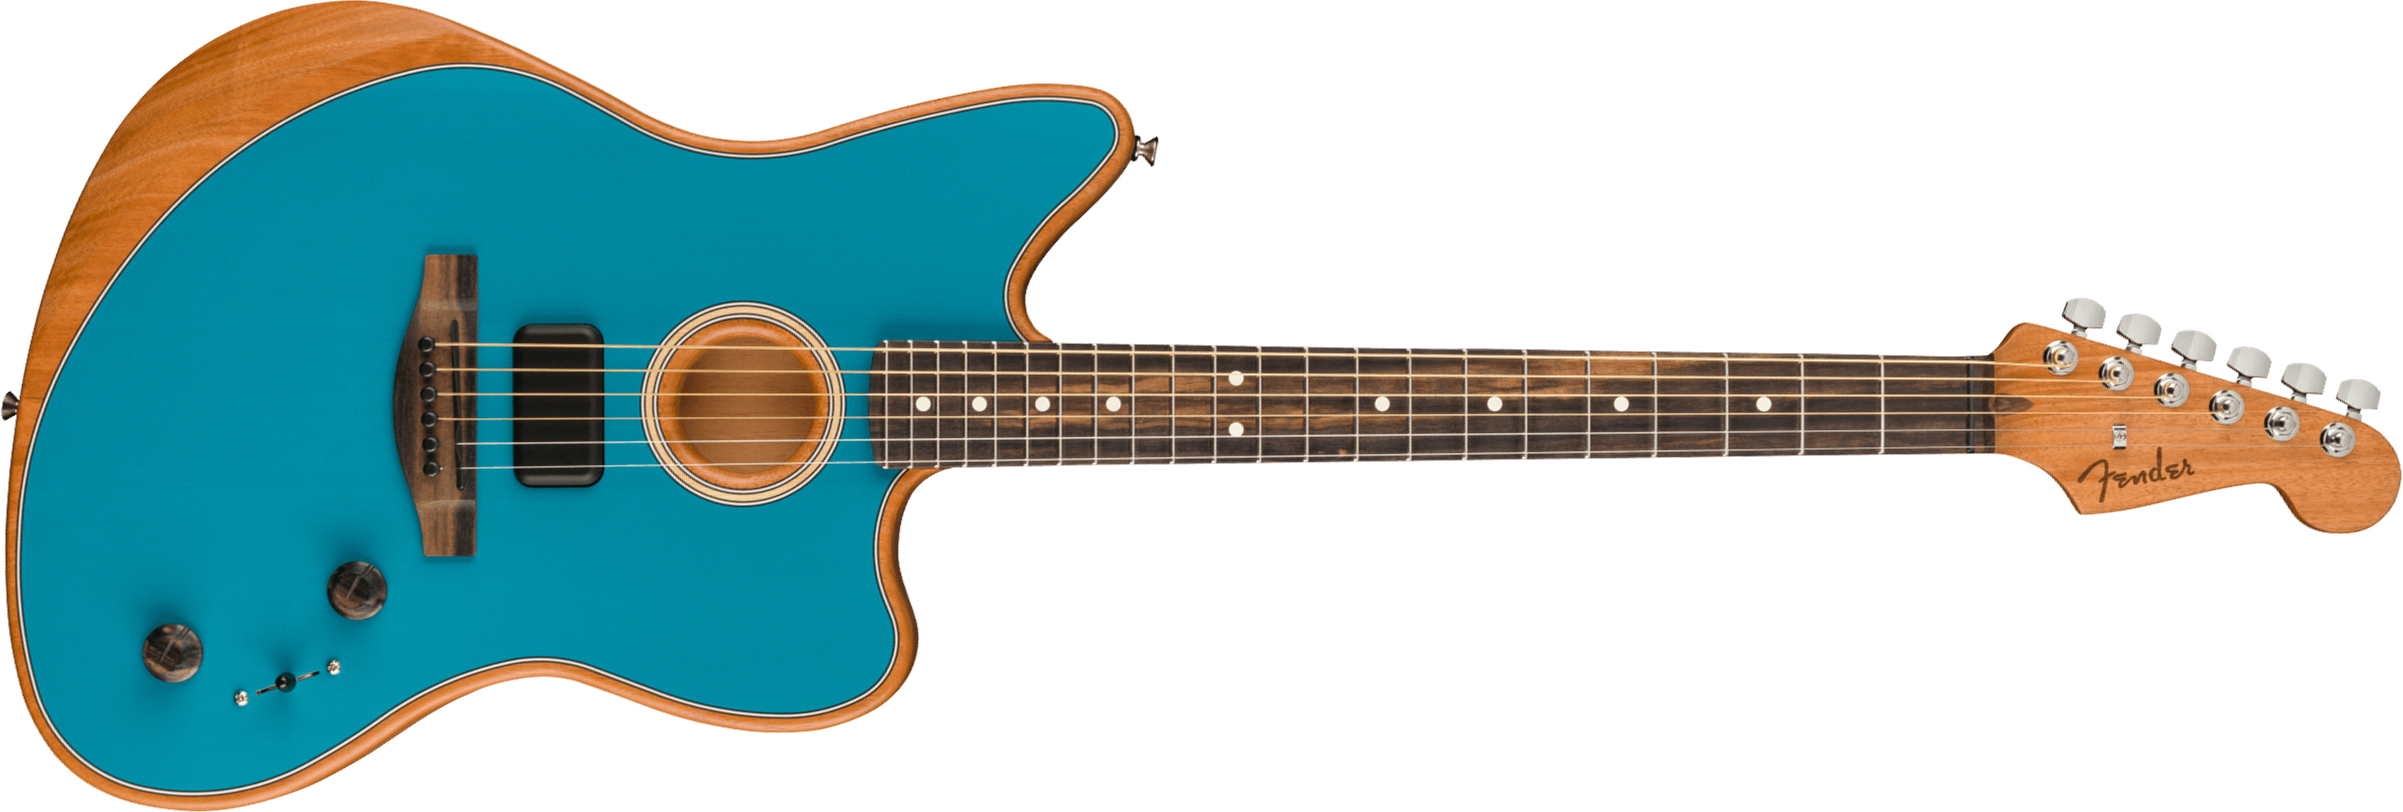 Fender American Acoustasonic Jazzmaster Usa Eb - Ocean Turquoise - Electro acoustic guitar - Main picture